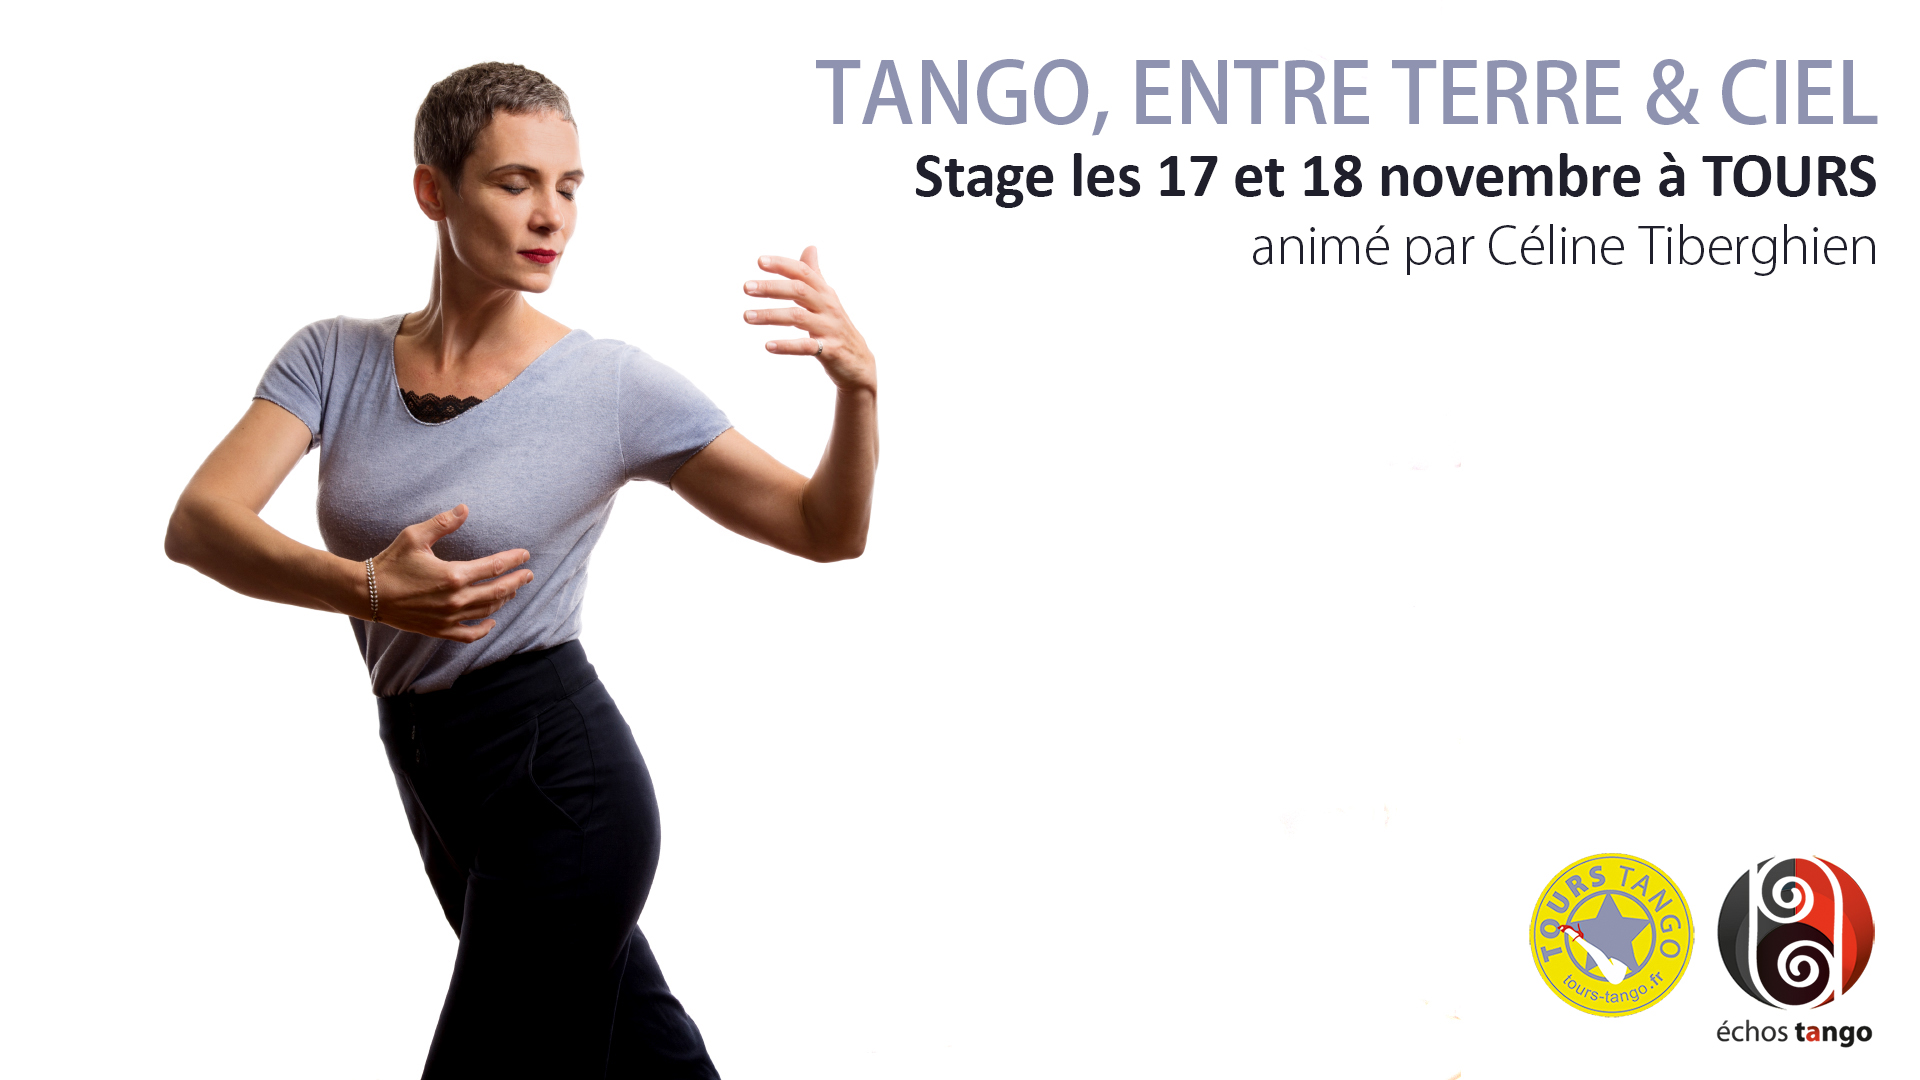 Tango, entre terre et ciel